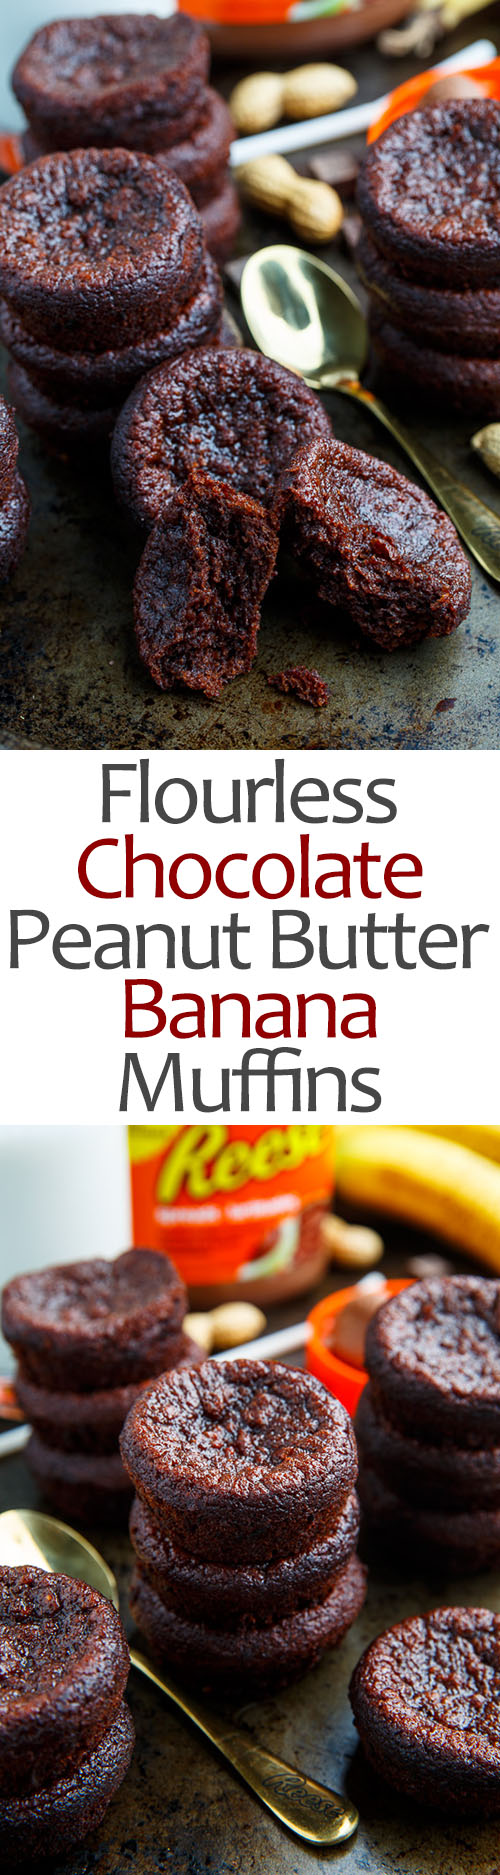 Flourless Chocolate Peanut Butter and Banana Muffins